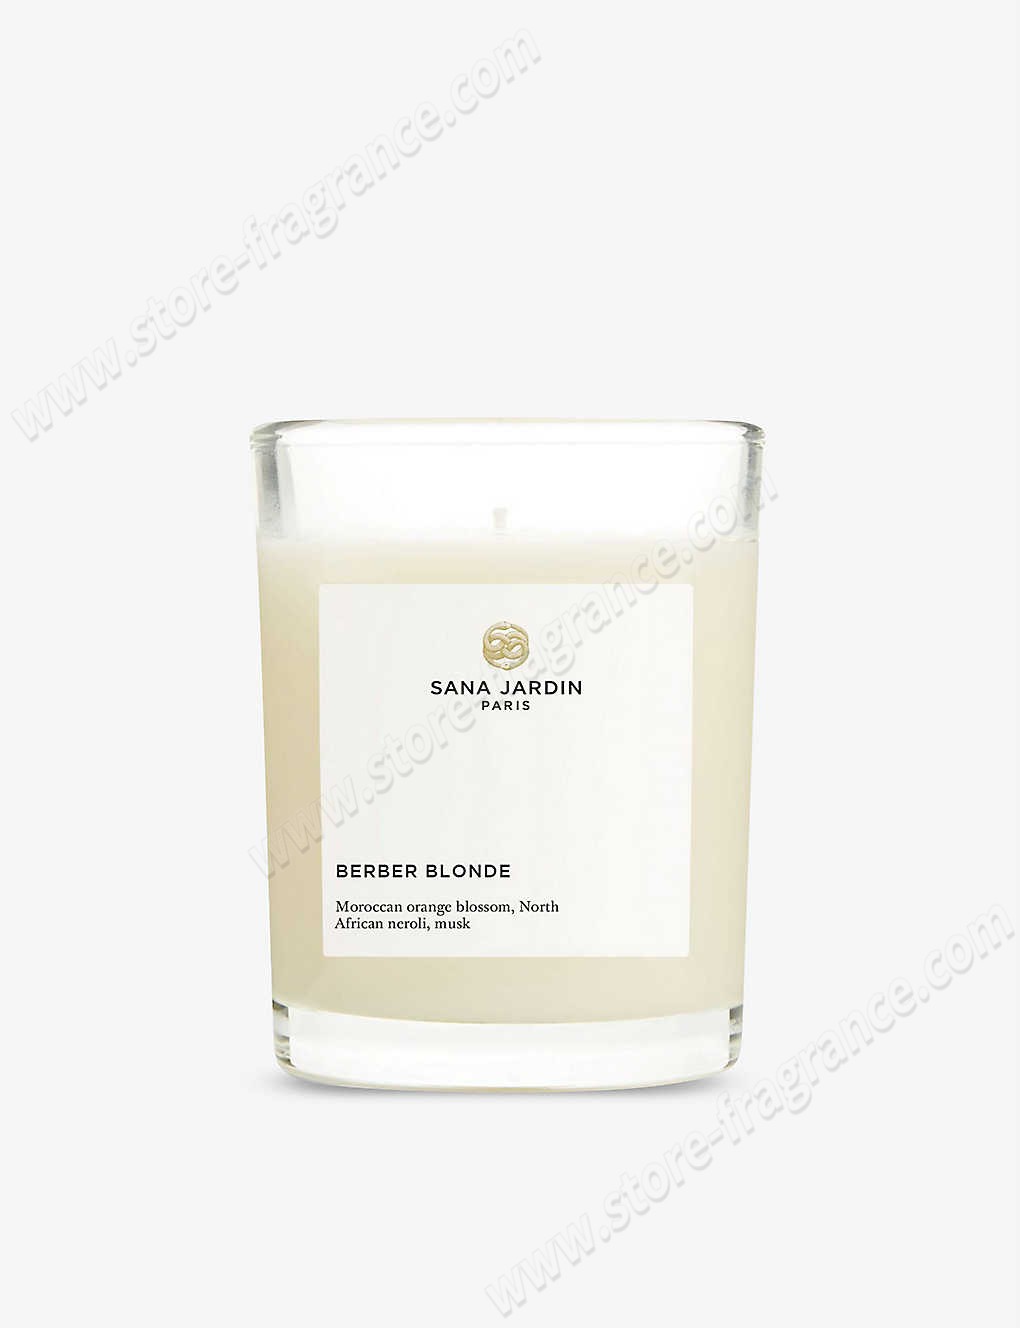 SANA JARDIN/Berber Blonde scented candle 190g ✿ Discount Store - SANA JARDIN/Berber Blonde scented candle 190g ✿ Discount Store